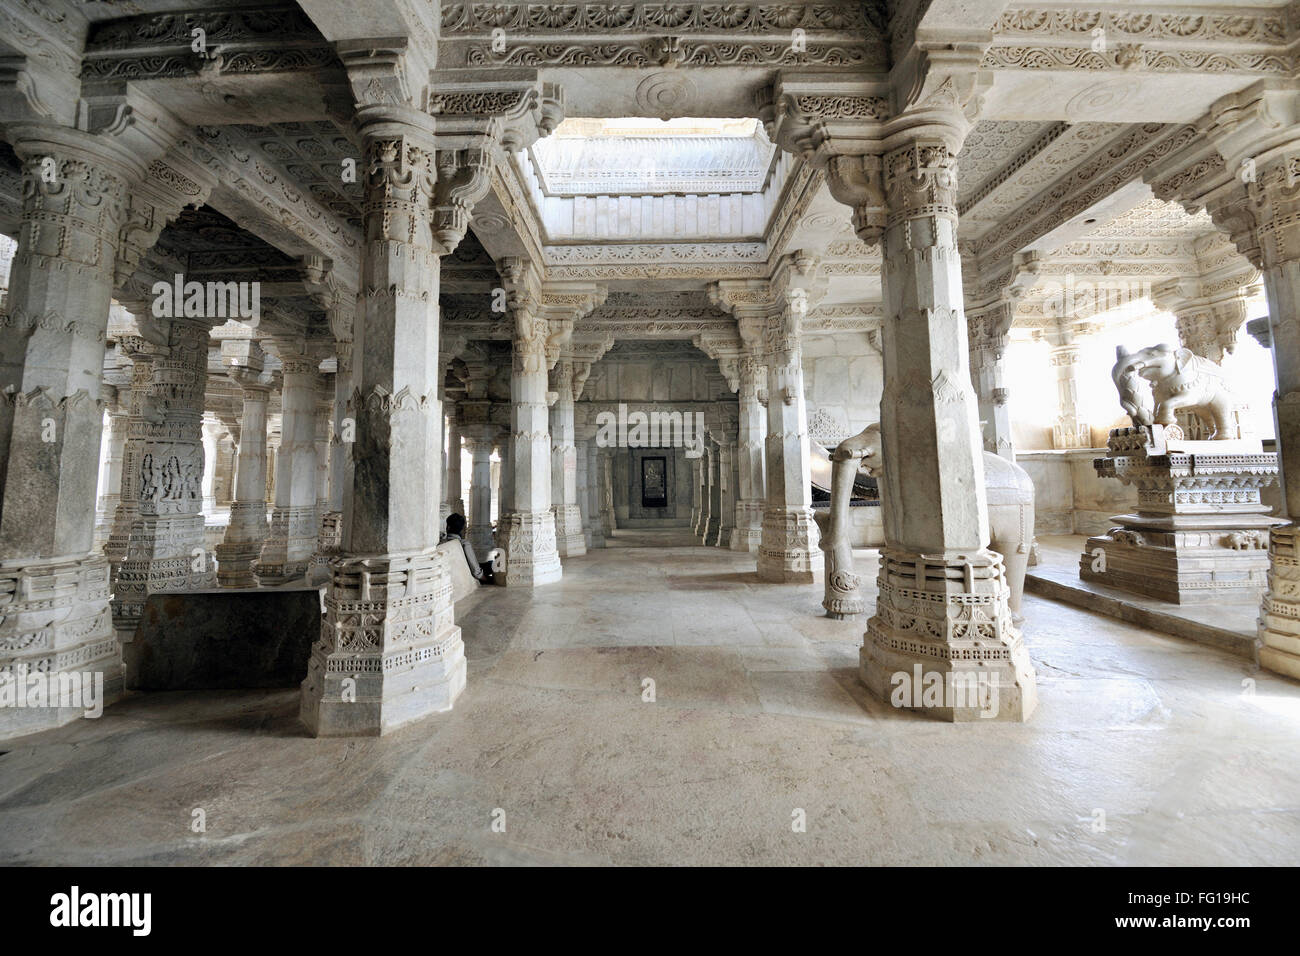 Adinath Jain Temple Ranakpur Rajasthan India Asia June 2010 Stock Photo